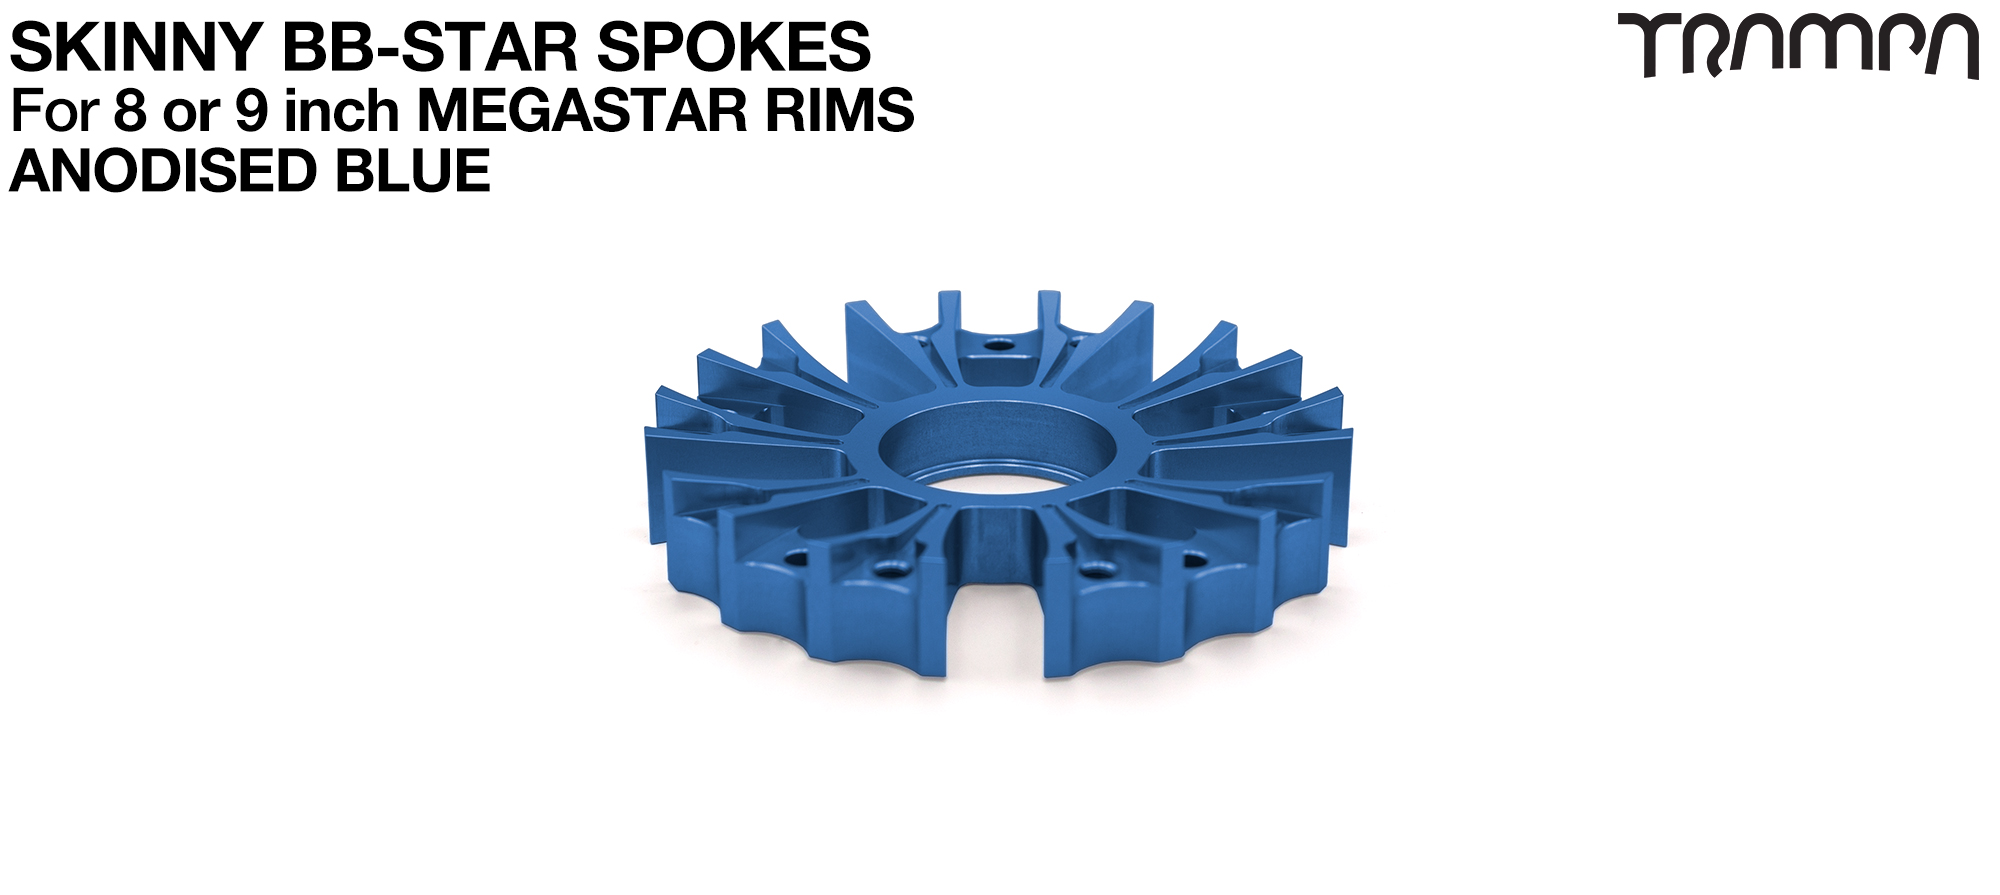 BBStar SKINNY Spoke for MEGASTAR 8 & 9 Rims - Extruded T6 Heat Treated & CNC Precision milled - BLUE